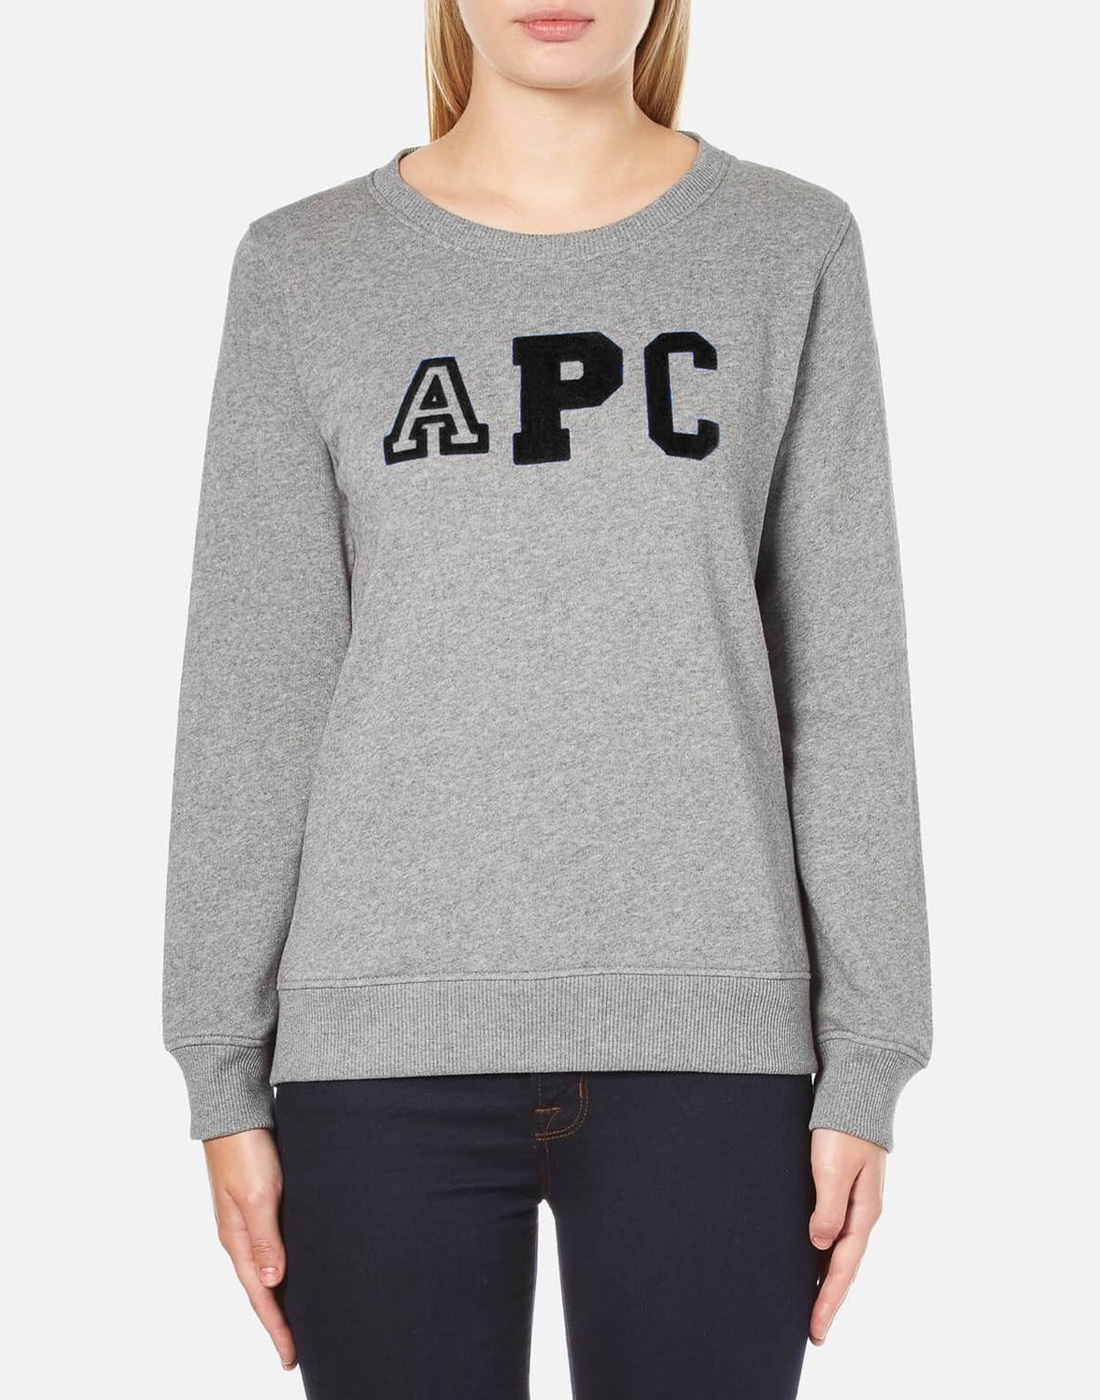 A.P.C. Womens Big Logo Sweatshirt, Grey